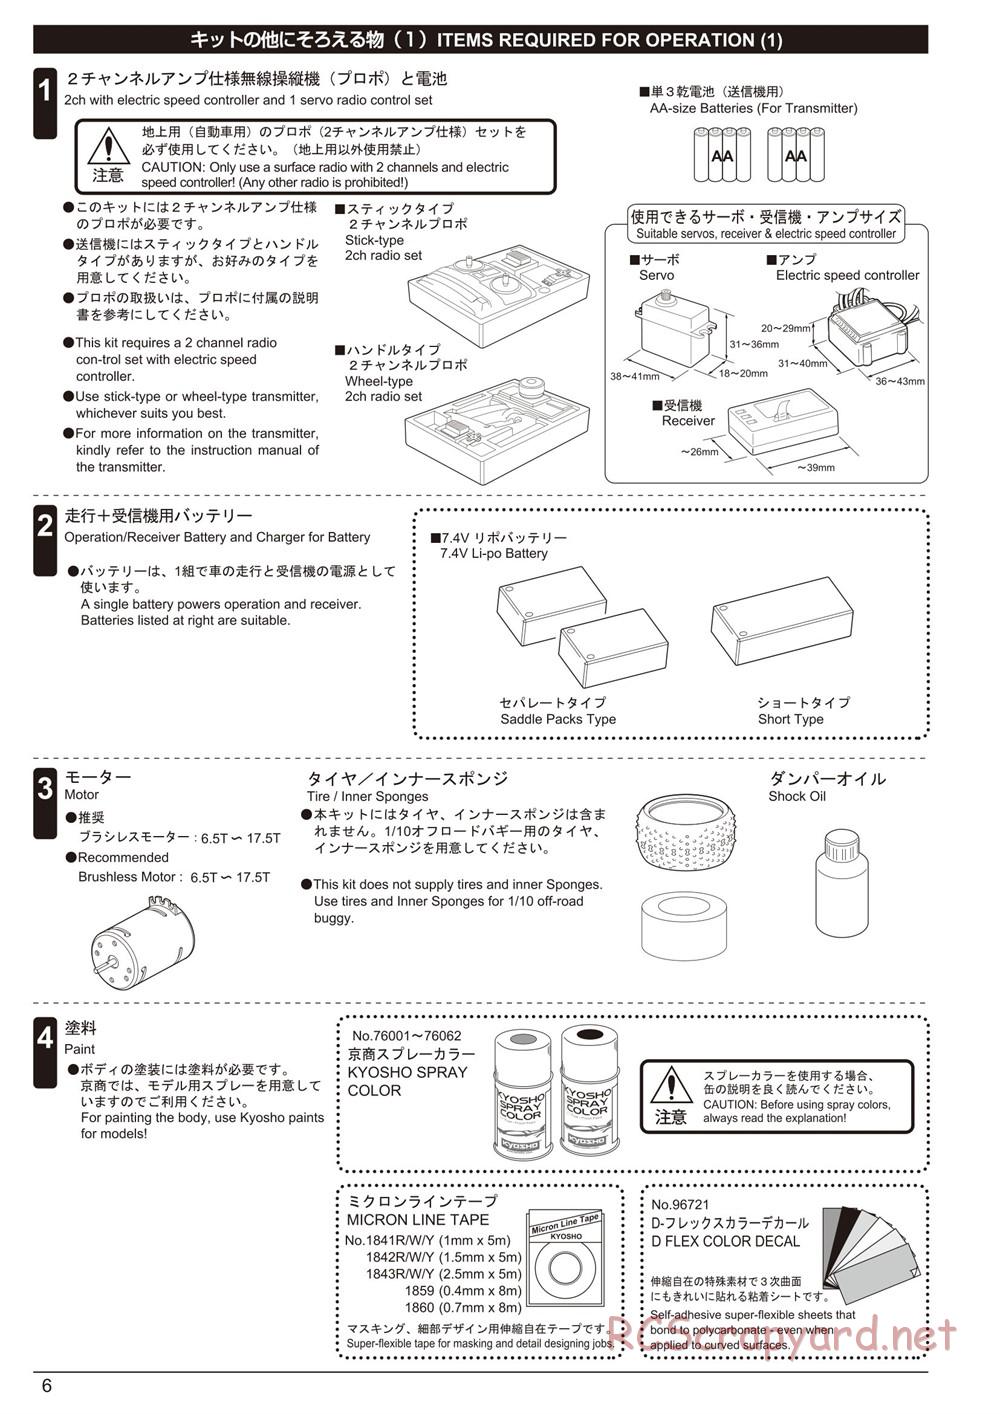 Kyosho - Lazer ZX-6 - Manual - Page 6